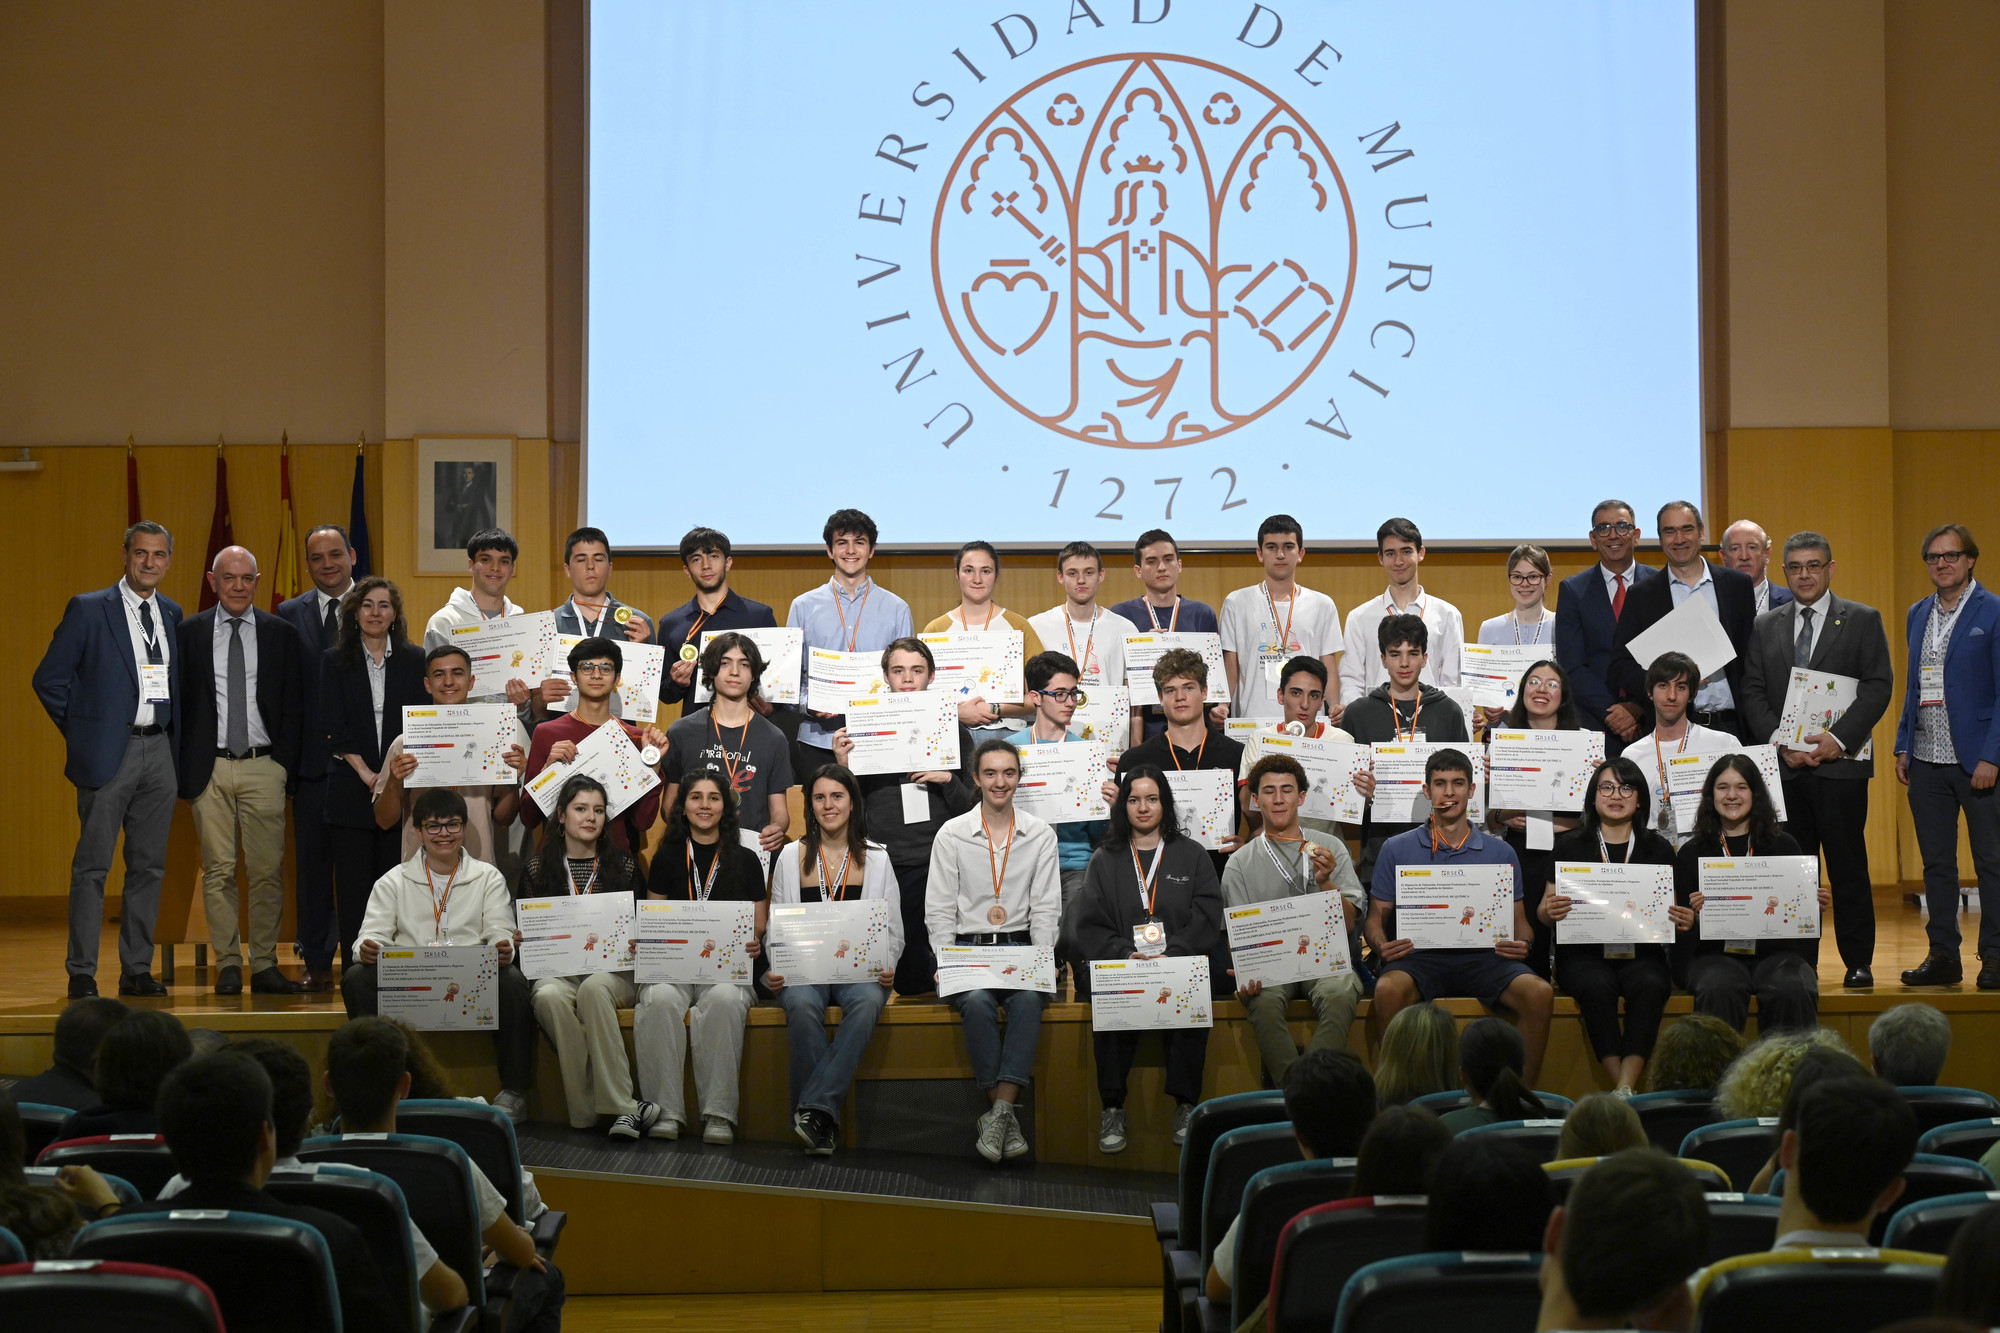 Nota de prensa - 120 alumnos compiten en la Olimpiada Nacional de Química, celebrada en la UMU